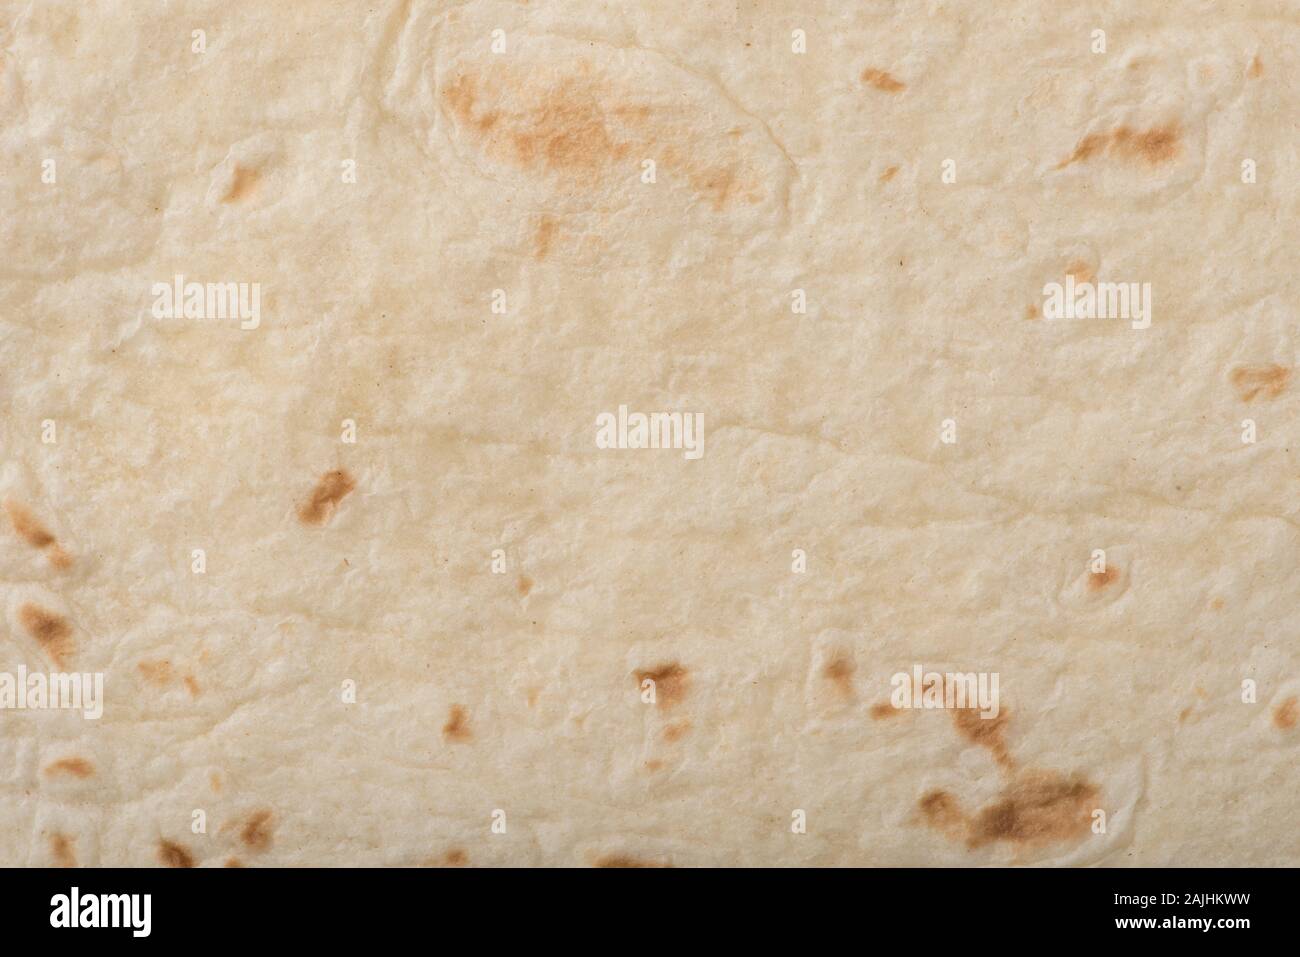 Closeup texture of a flour tortilla. Stock Photo